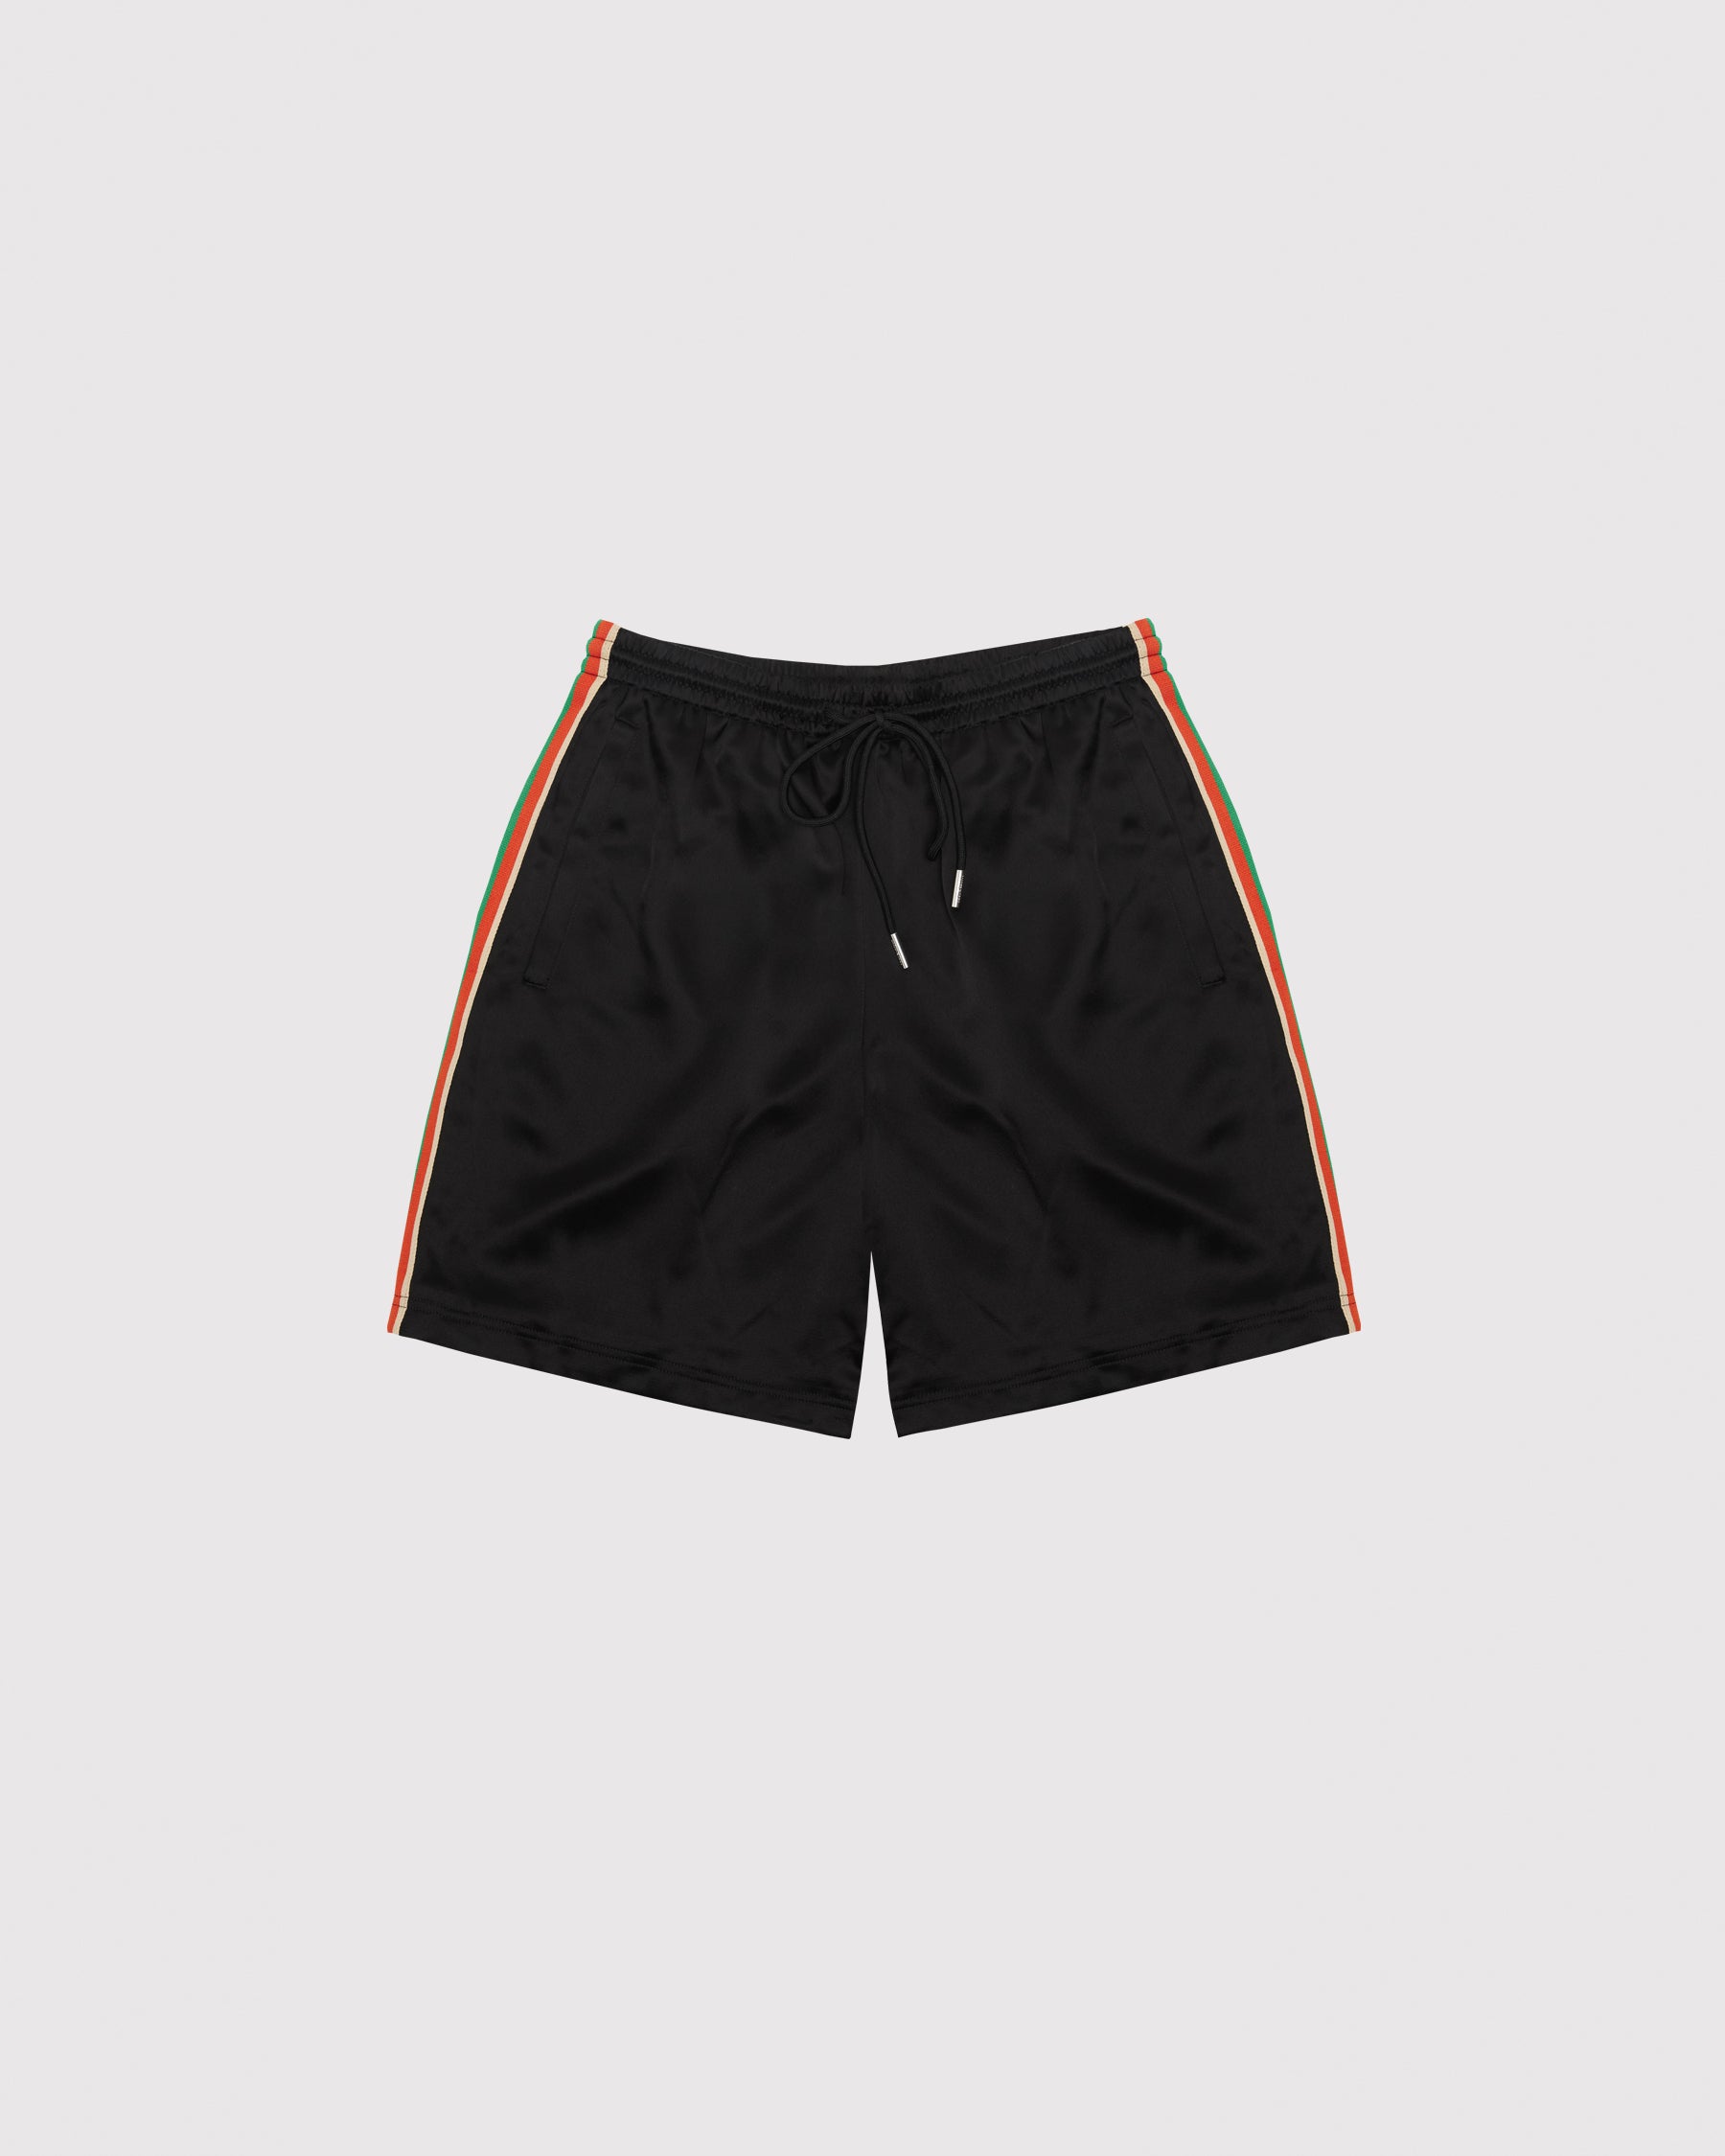 Black Satin "Stripe" Basketball shorts